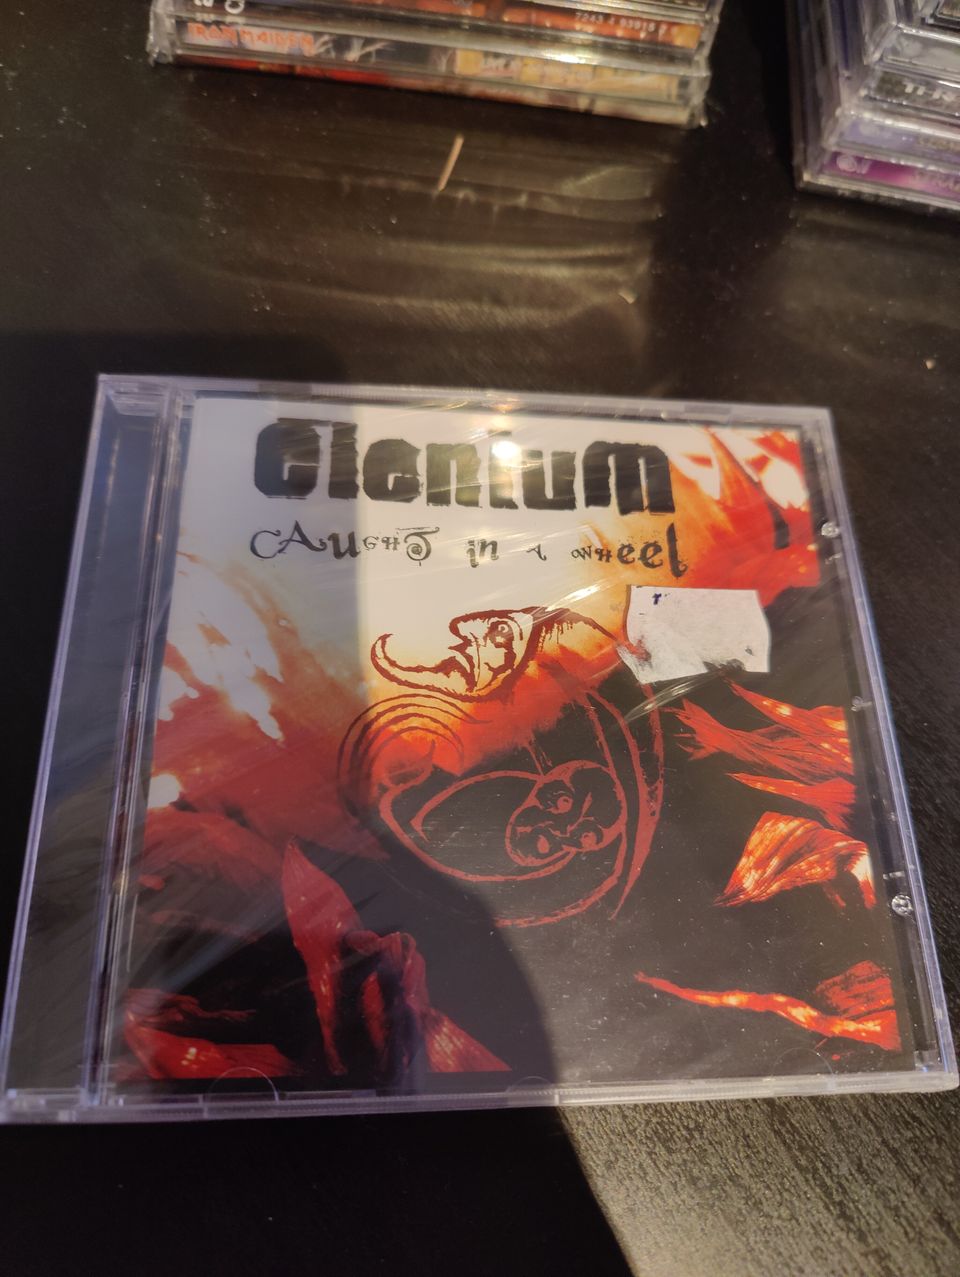 Elenium Caught in a wheel CD Mint